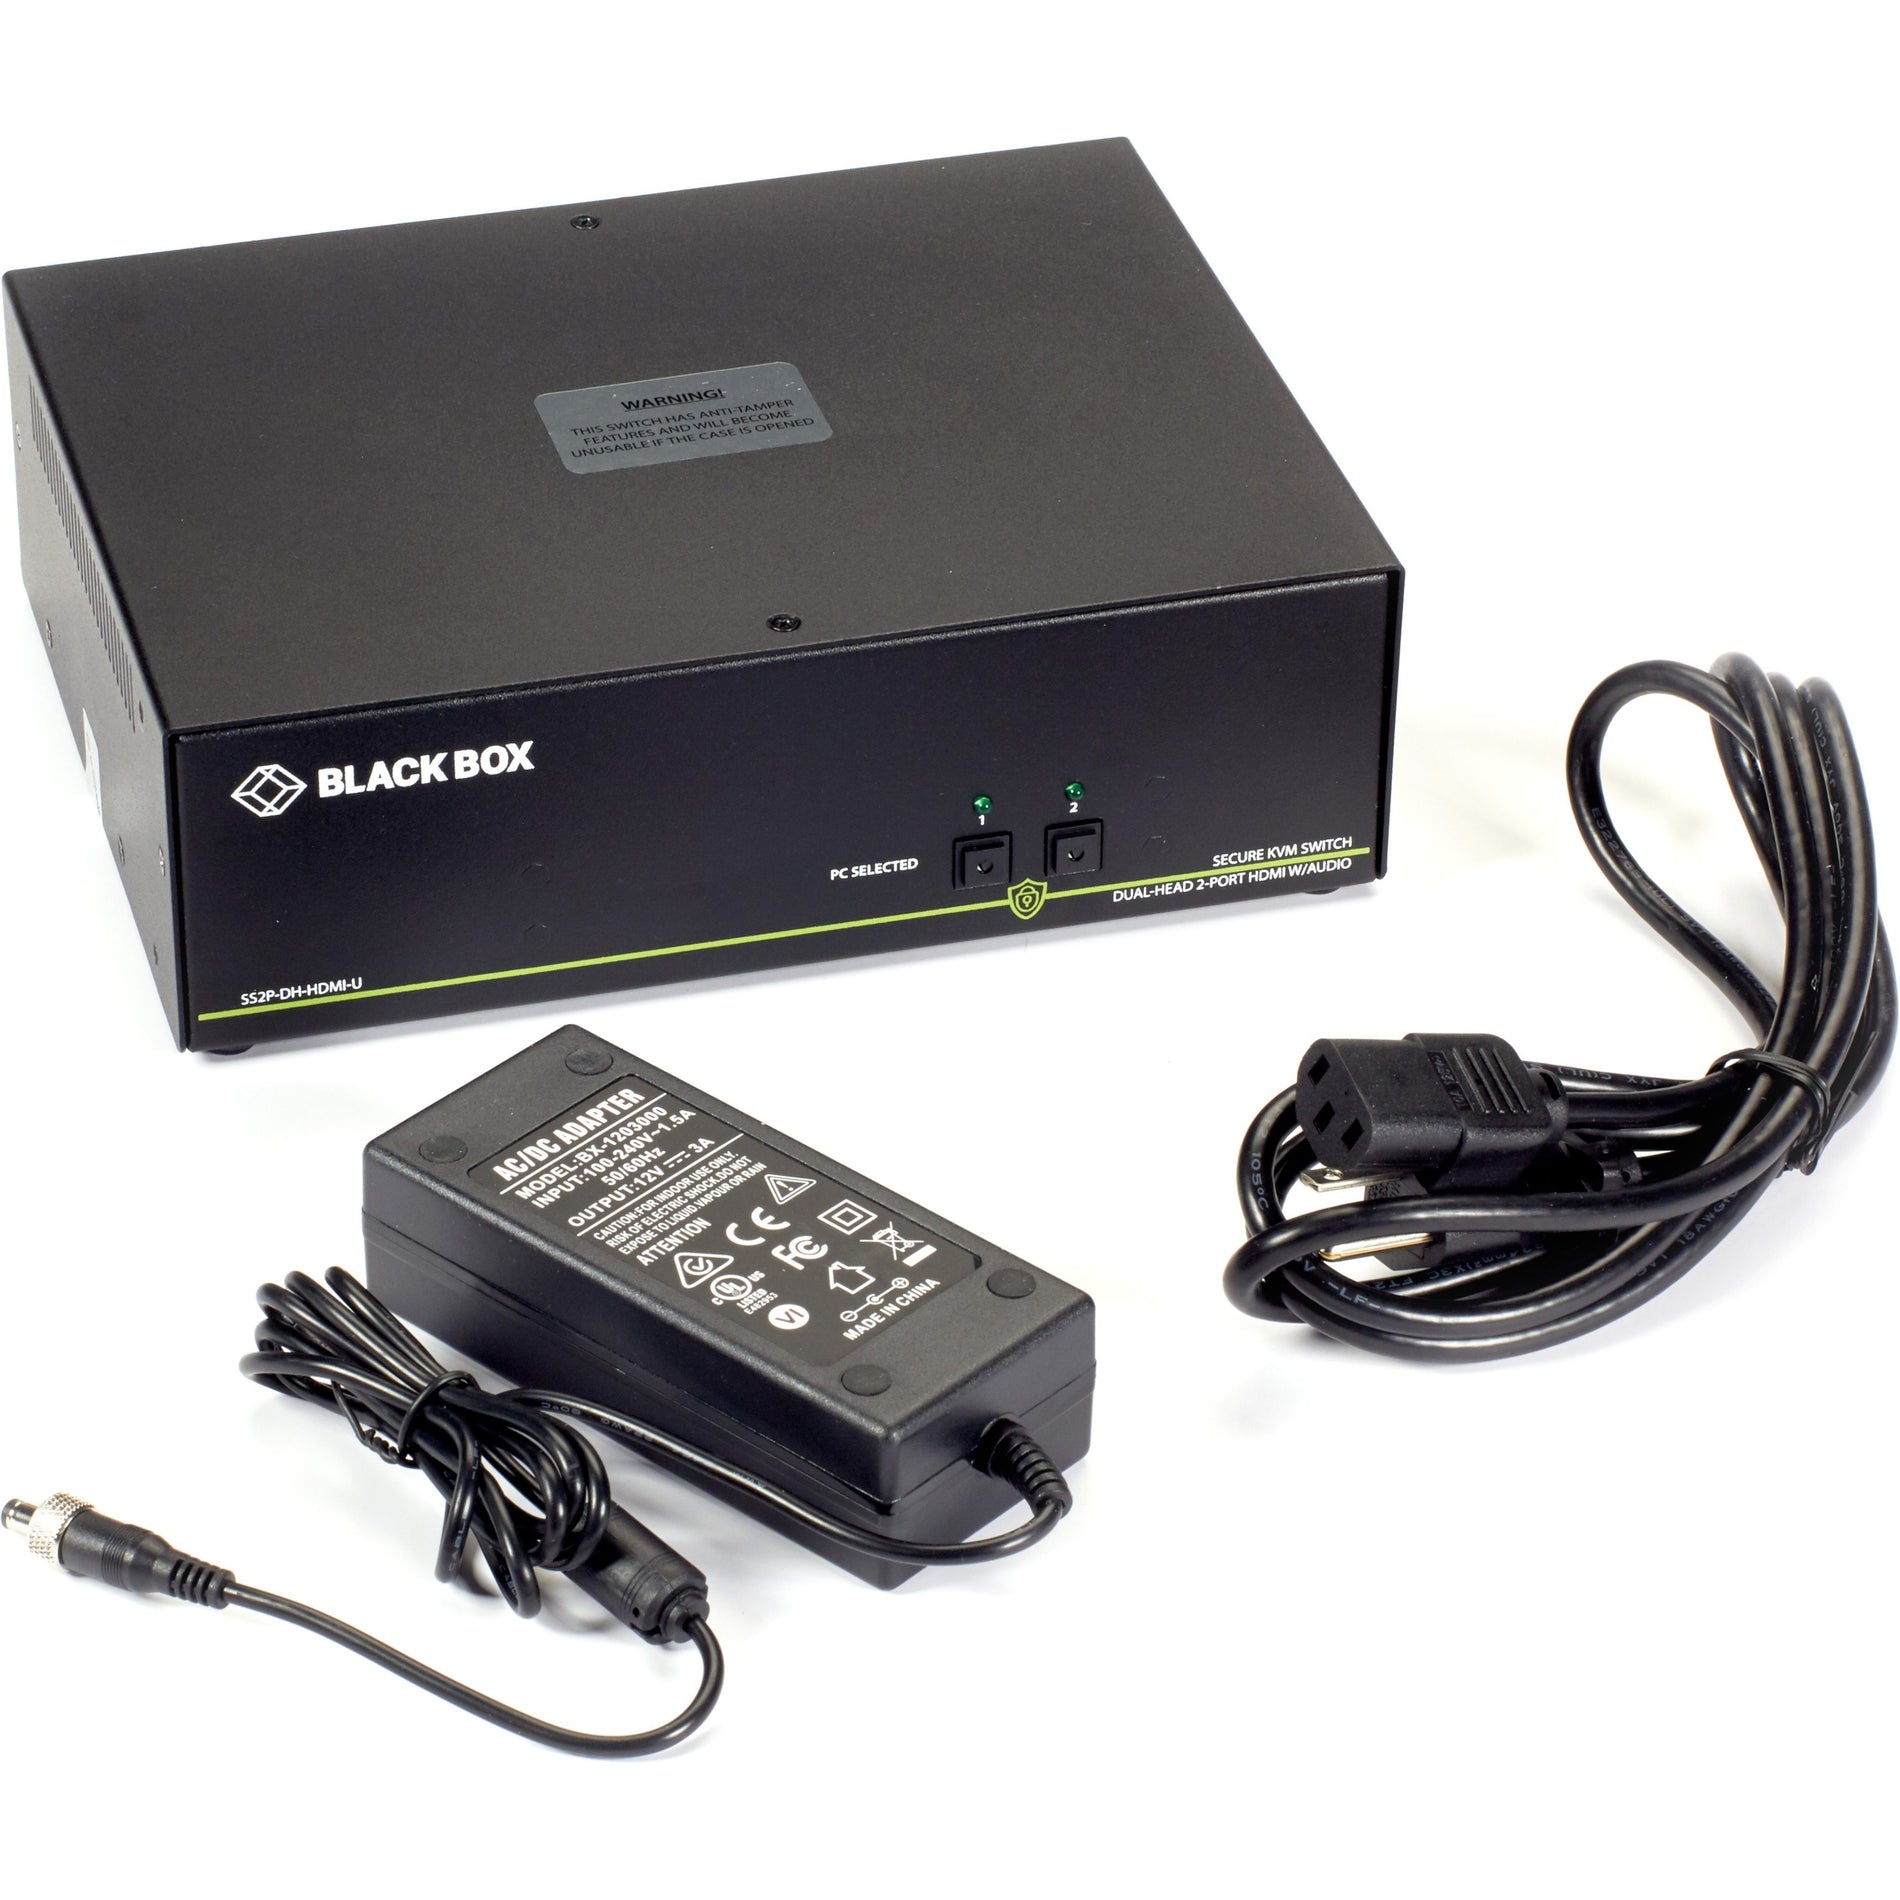 Black Box SS2P-DH-HDMI-U NIAP 3.0 Secure 2-Port Dual-Head HDMI KVM Switch, 4K, TAA Compliant